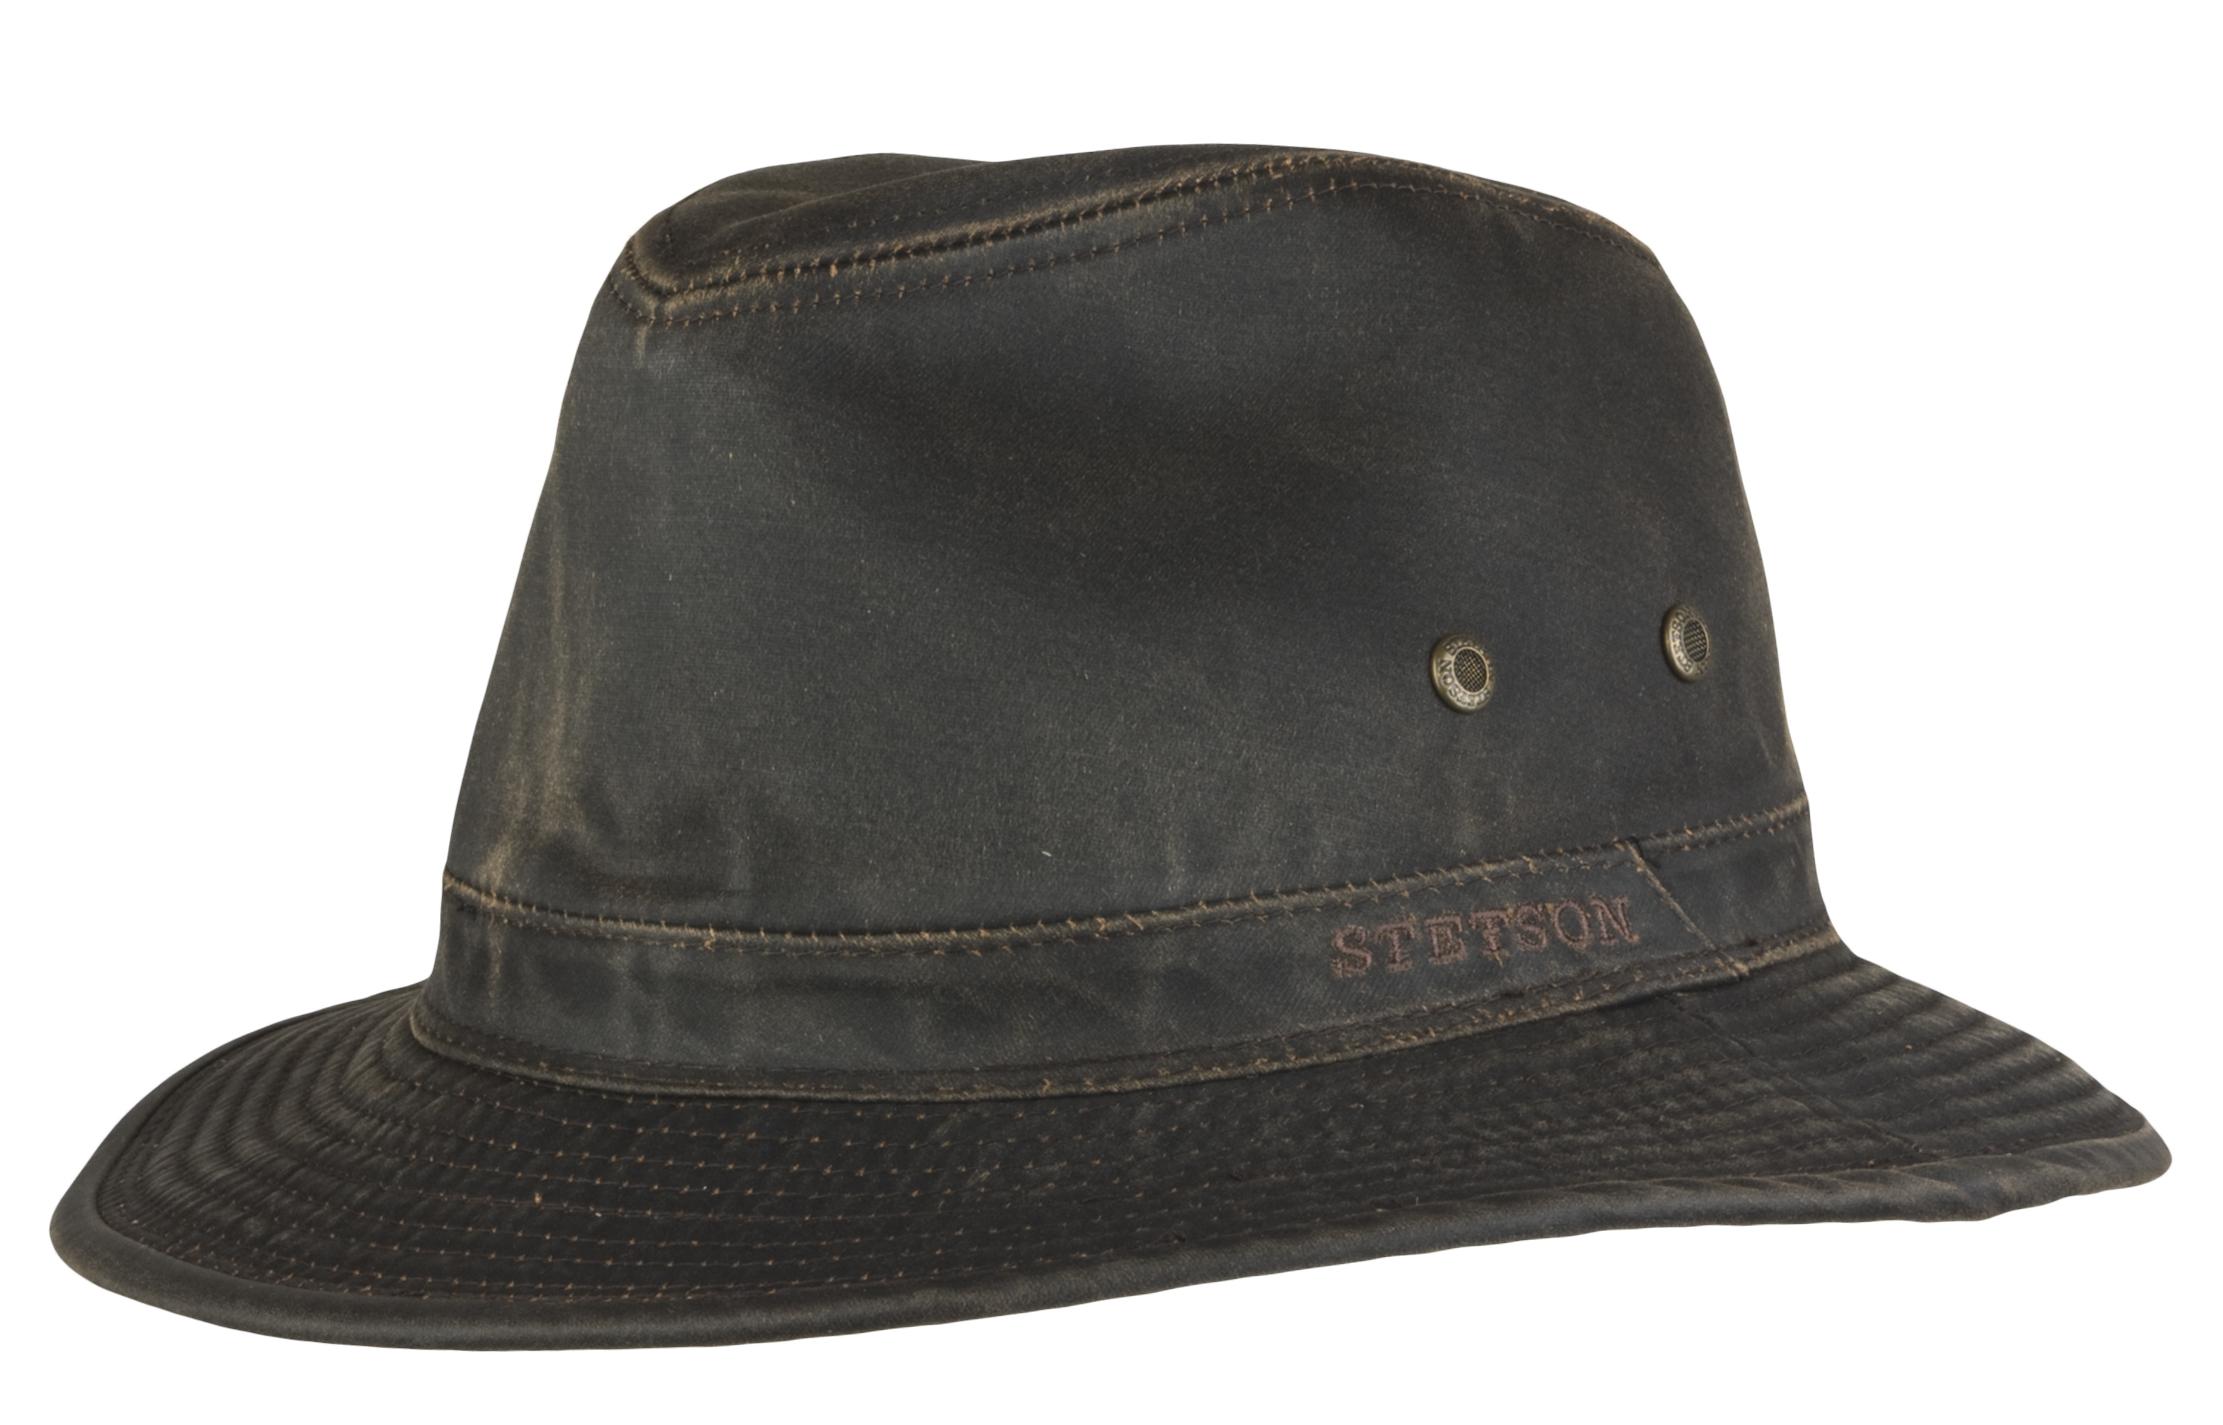 Stetson Traveller hat